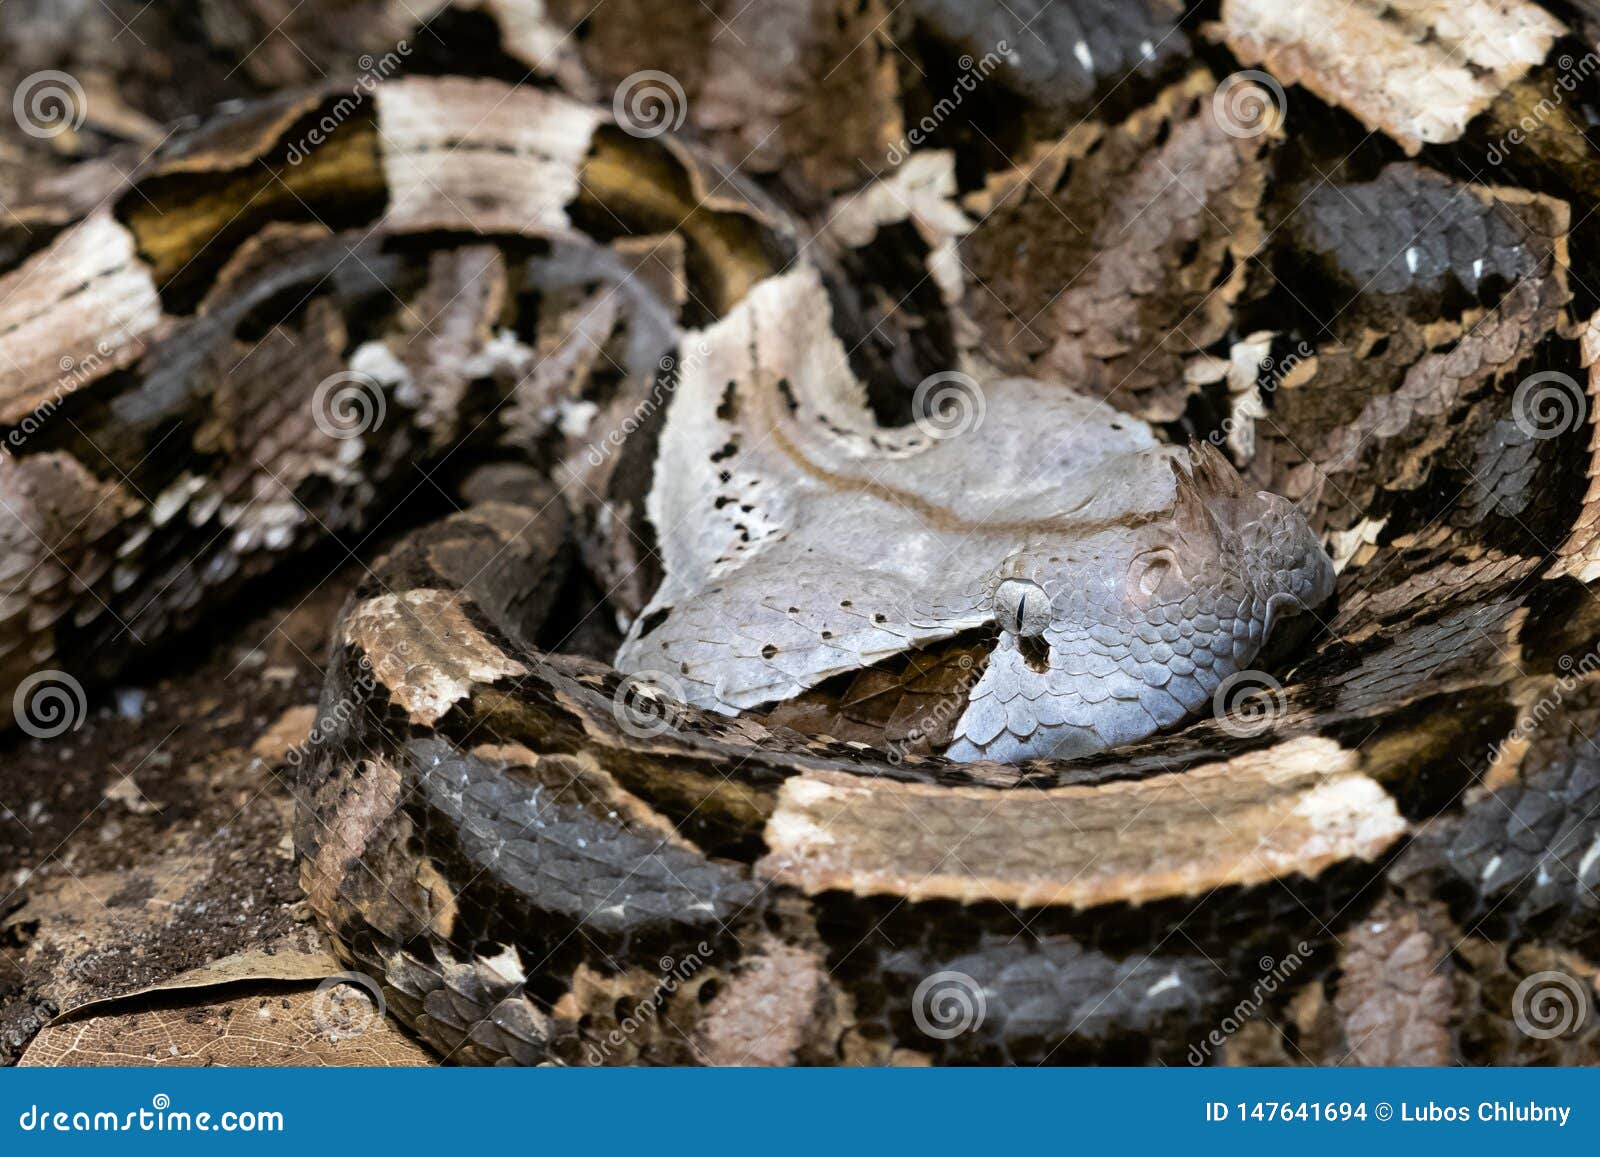 Venomous Bush Viper Atheris Squamigera Tree Stock Photo by ©xtrekx 568641852